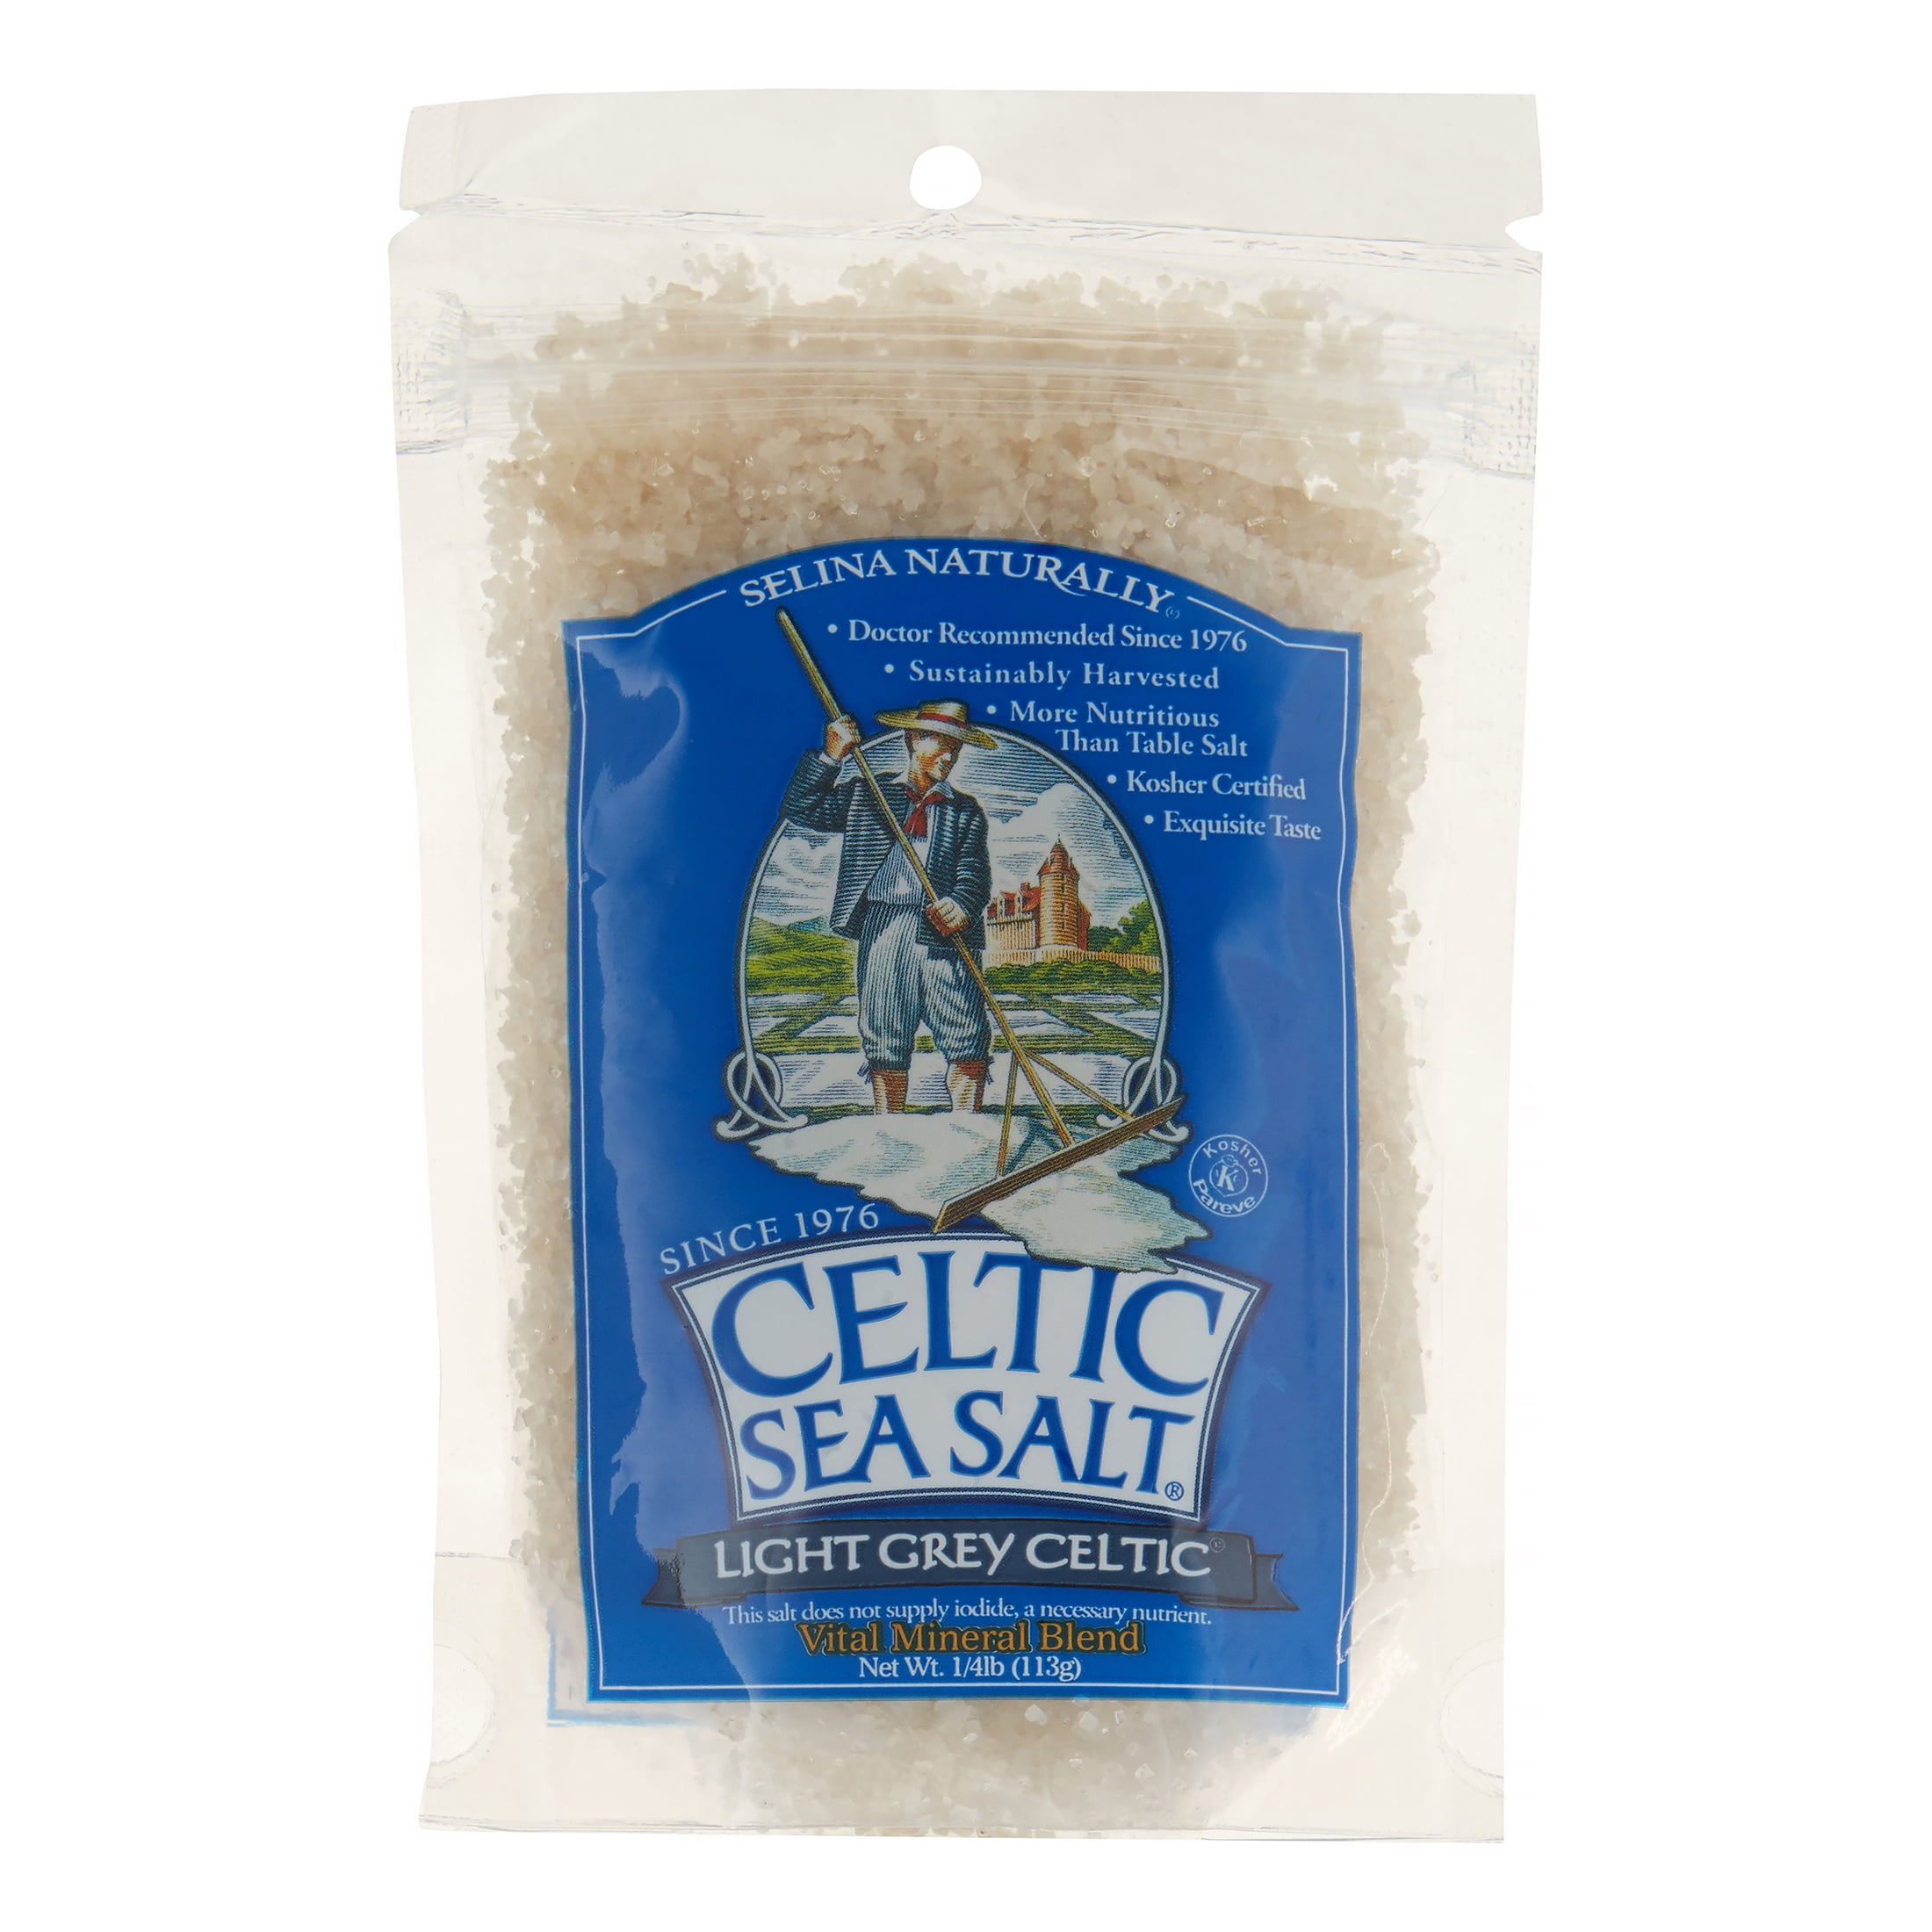 Organic Celtic Sel Gris Sea Salt (Coarse - 4 Oz Tube)